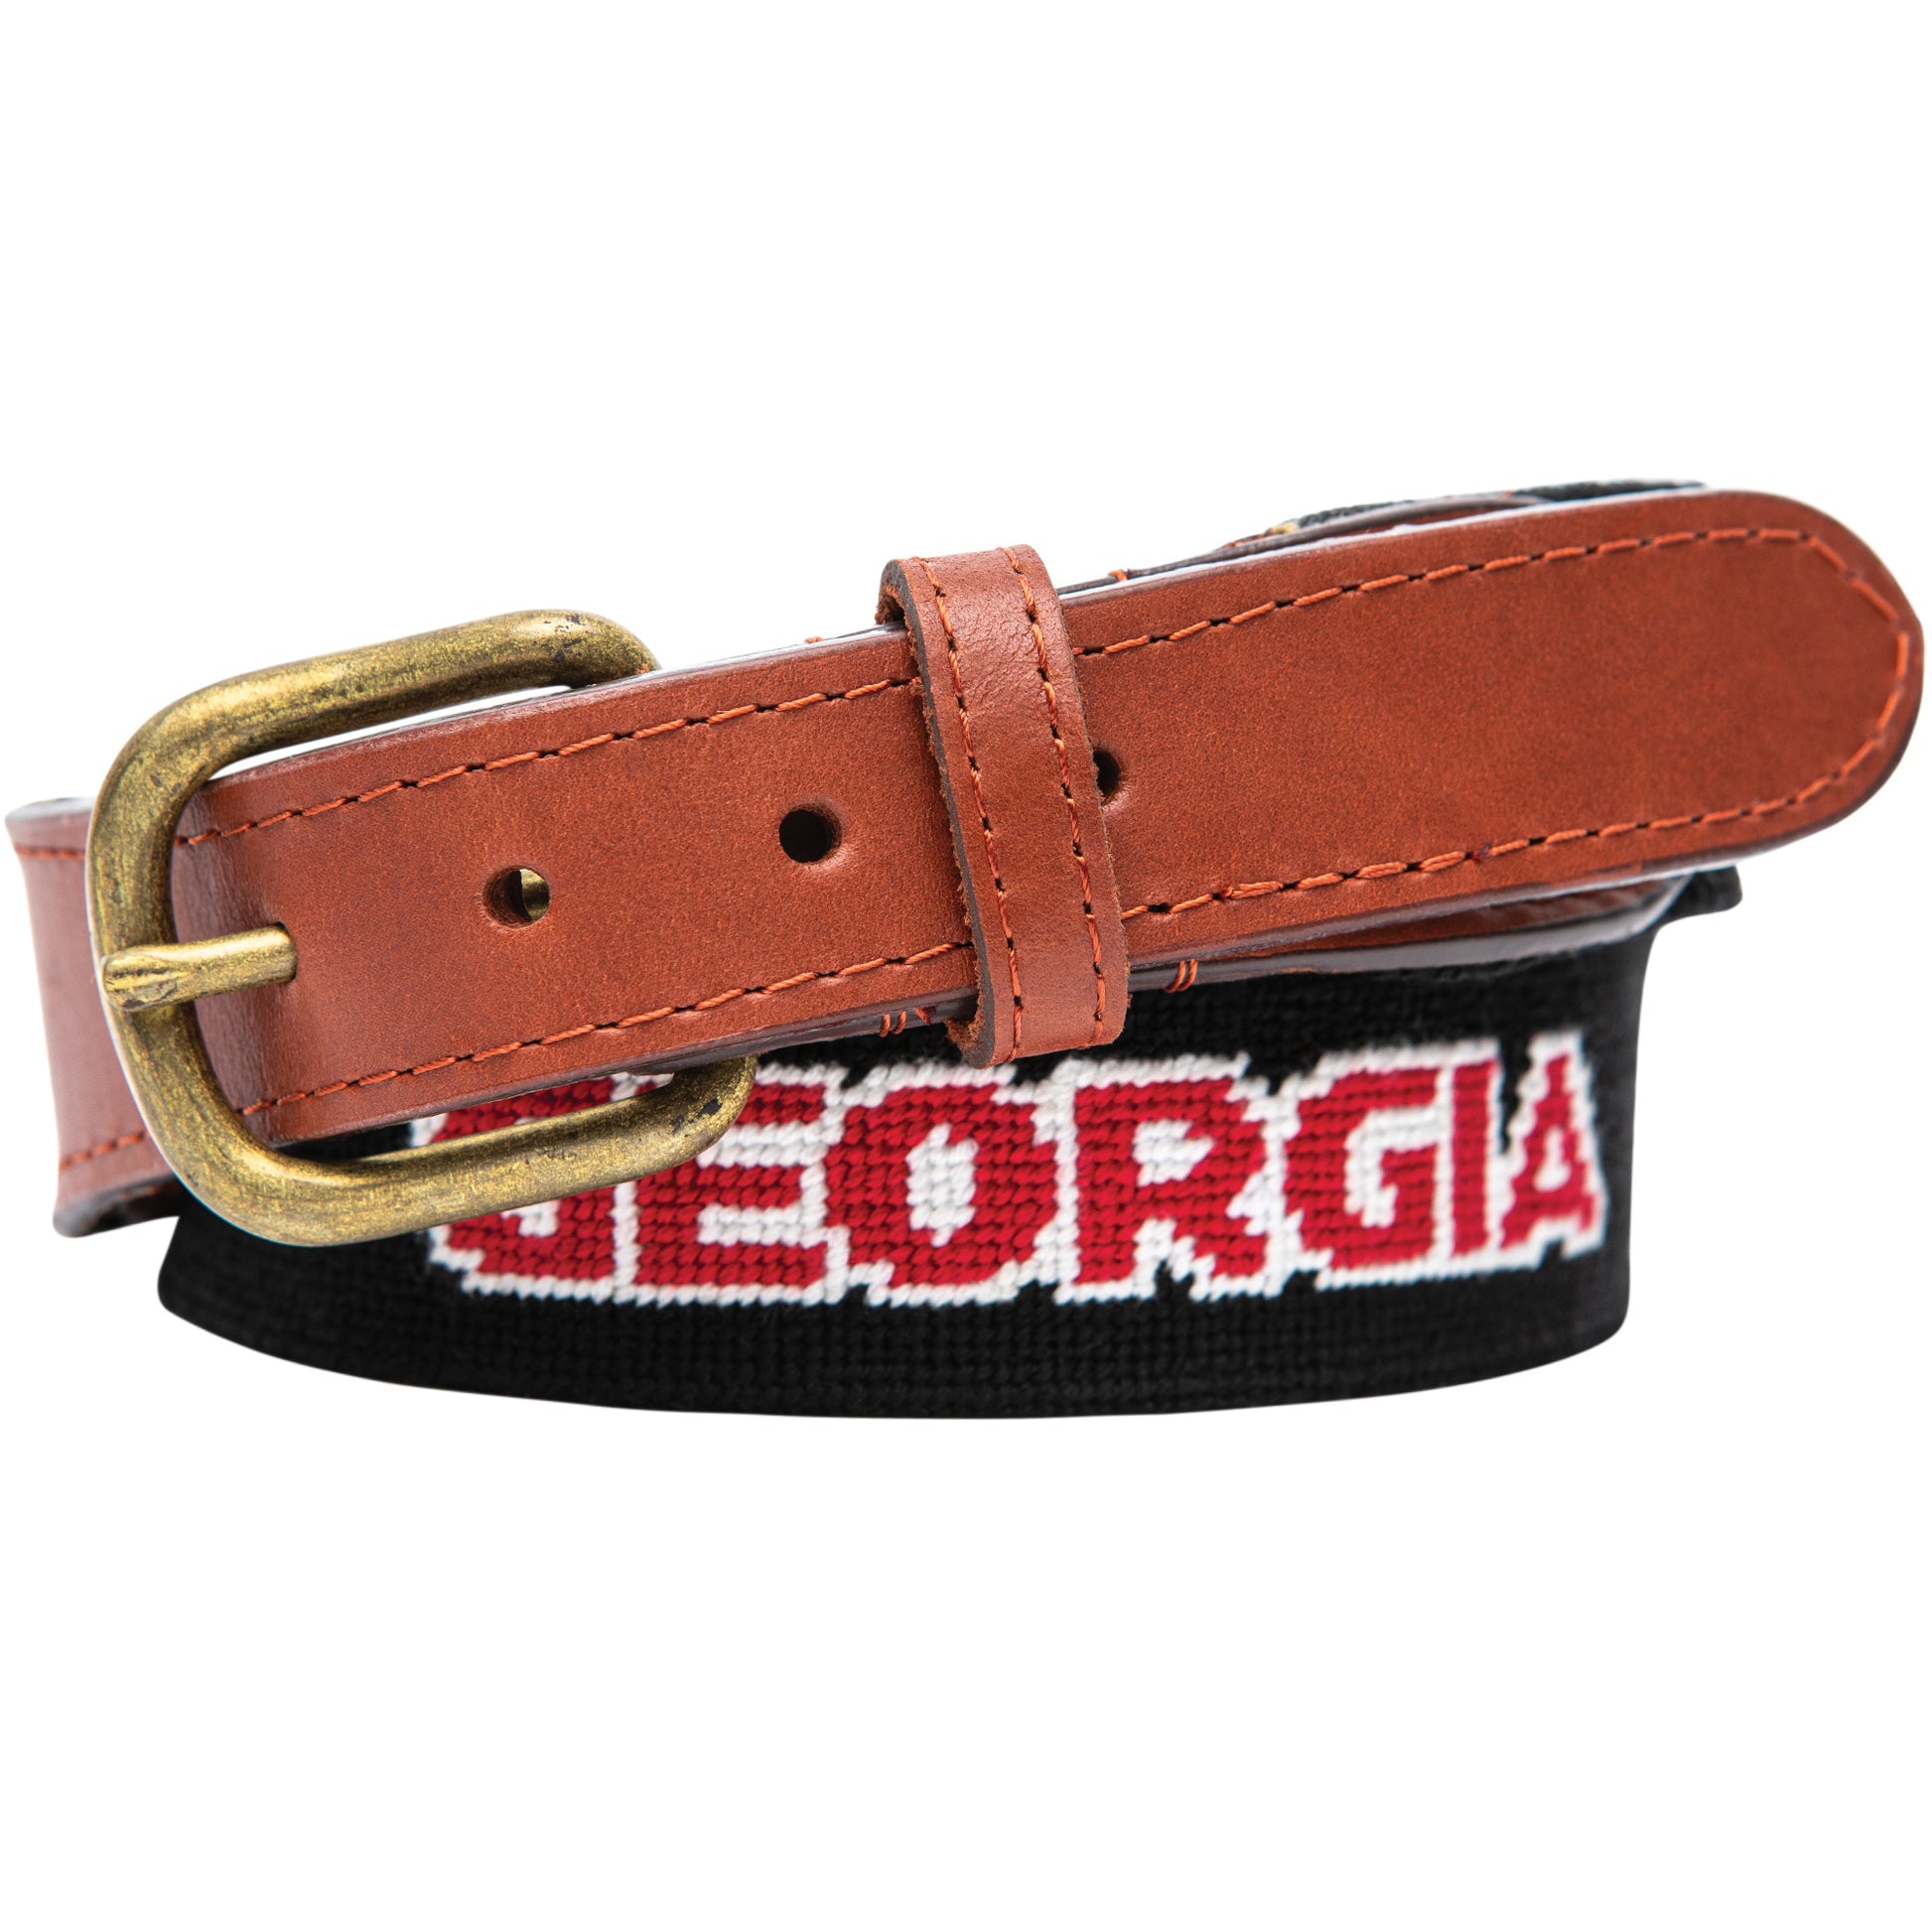 Gucci Belts for sale in Atlanta, Georgia